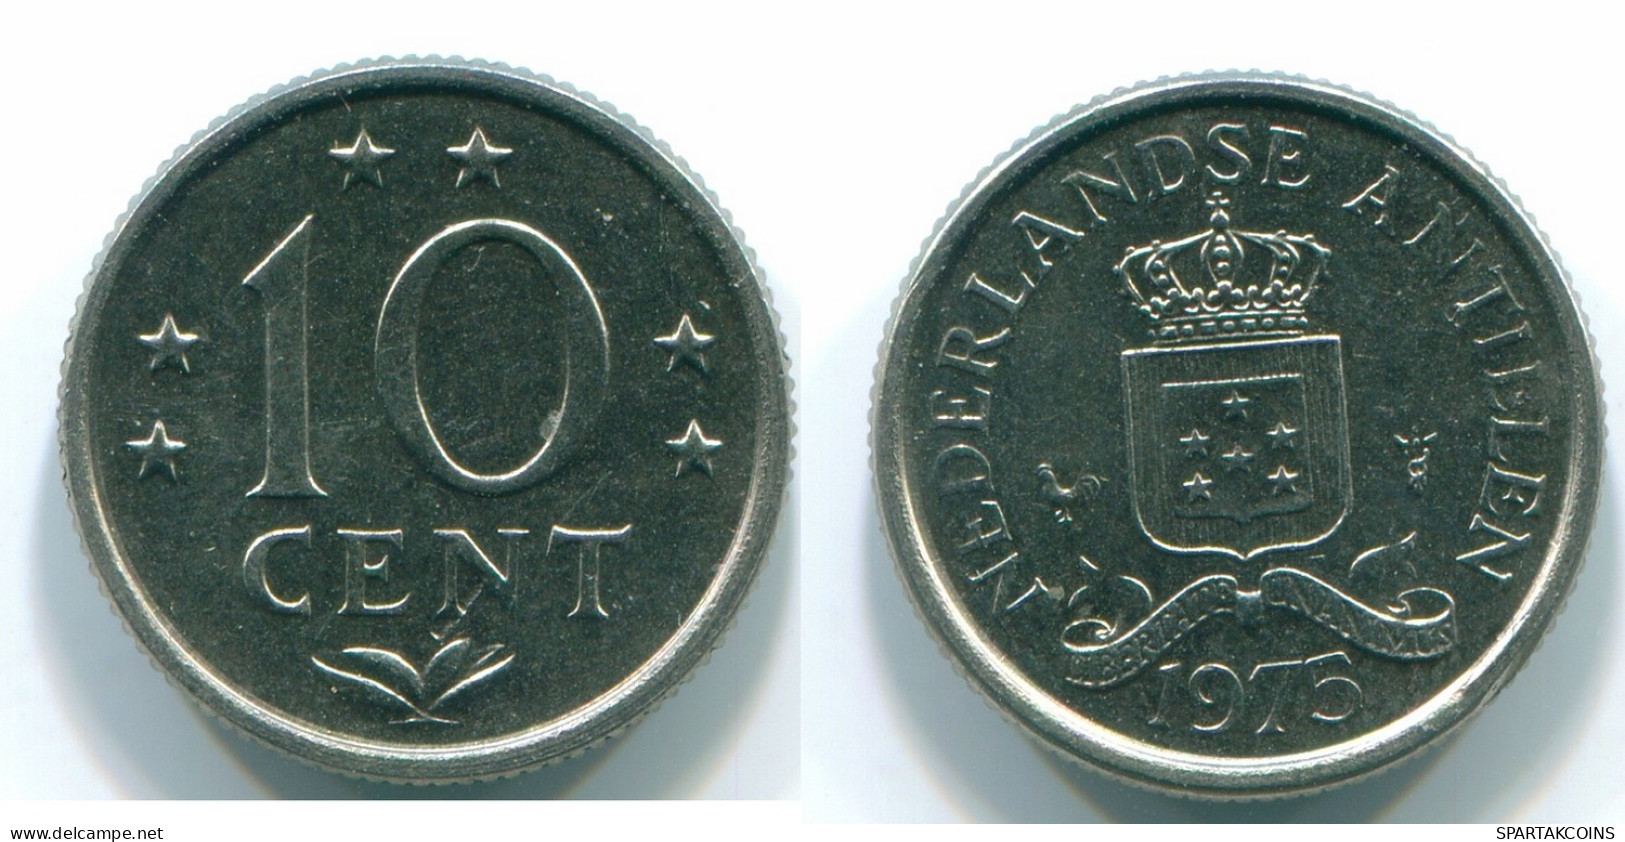 10 CENTS 1976 ANTILLES NÉERLANDAISES Nickel Colonial Pièce #S13735.F.A - Antilles Néerlandaises